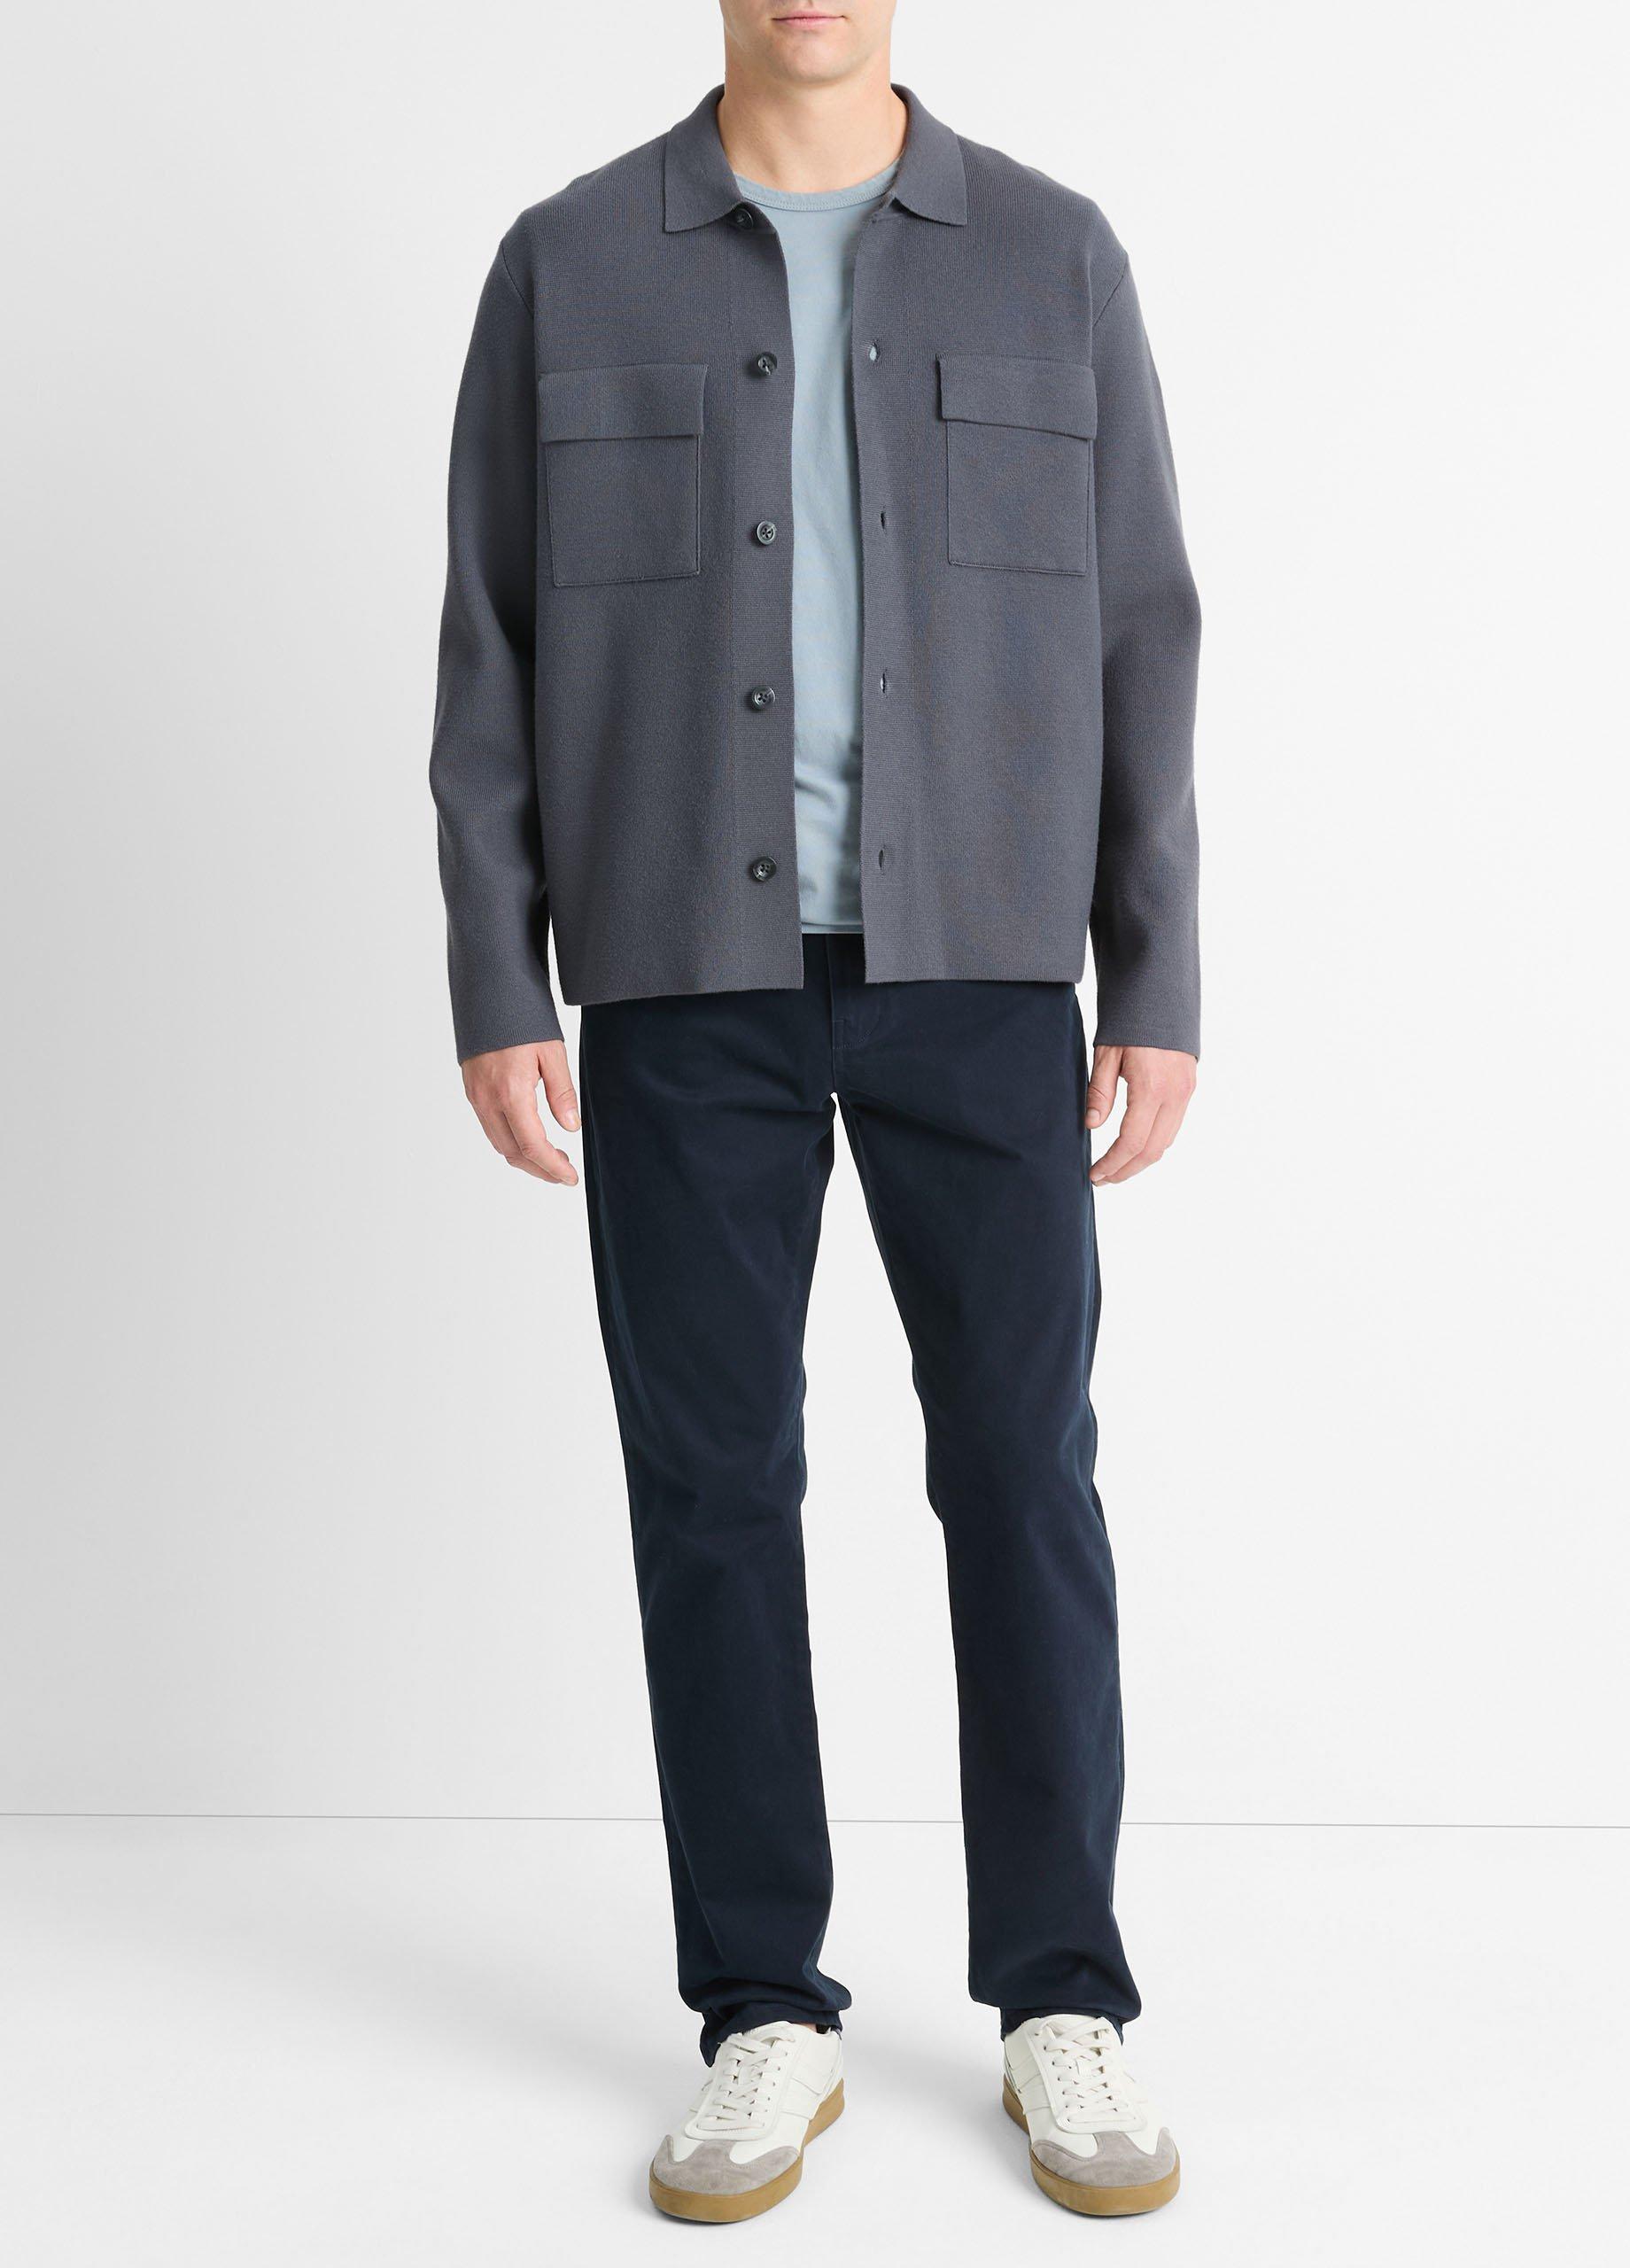 Milano-stitch Shirt Jacket, Light Carbon, Size XXL Vince